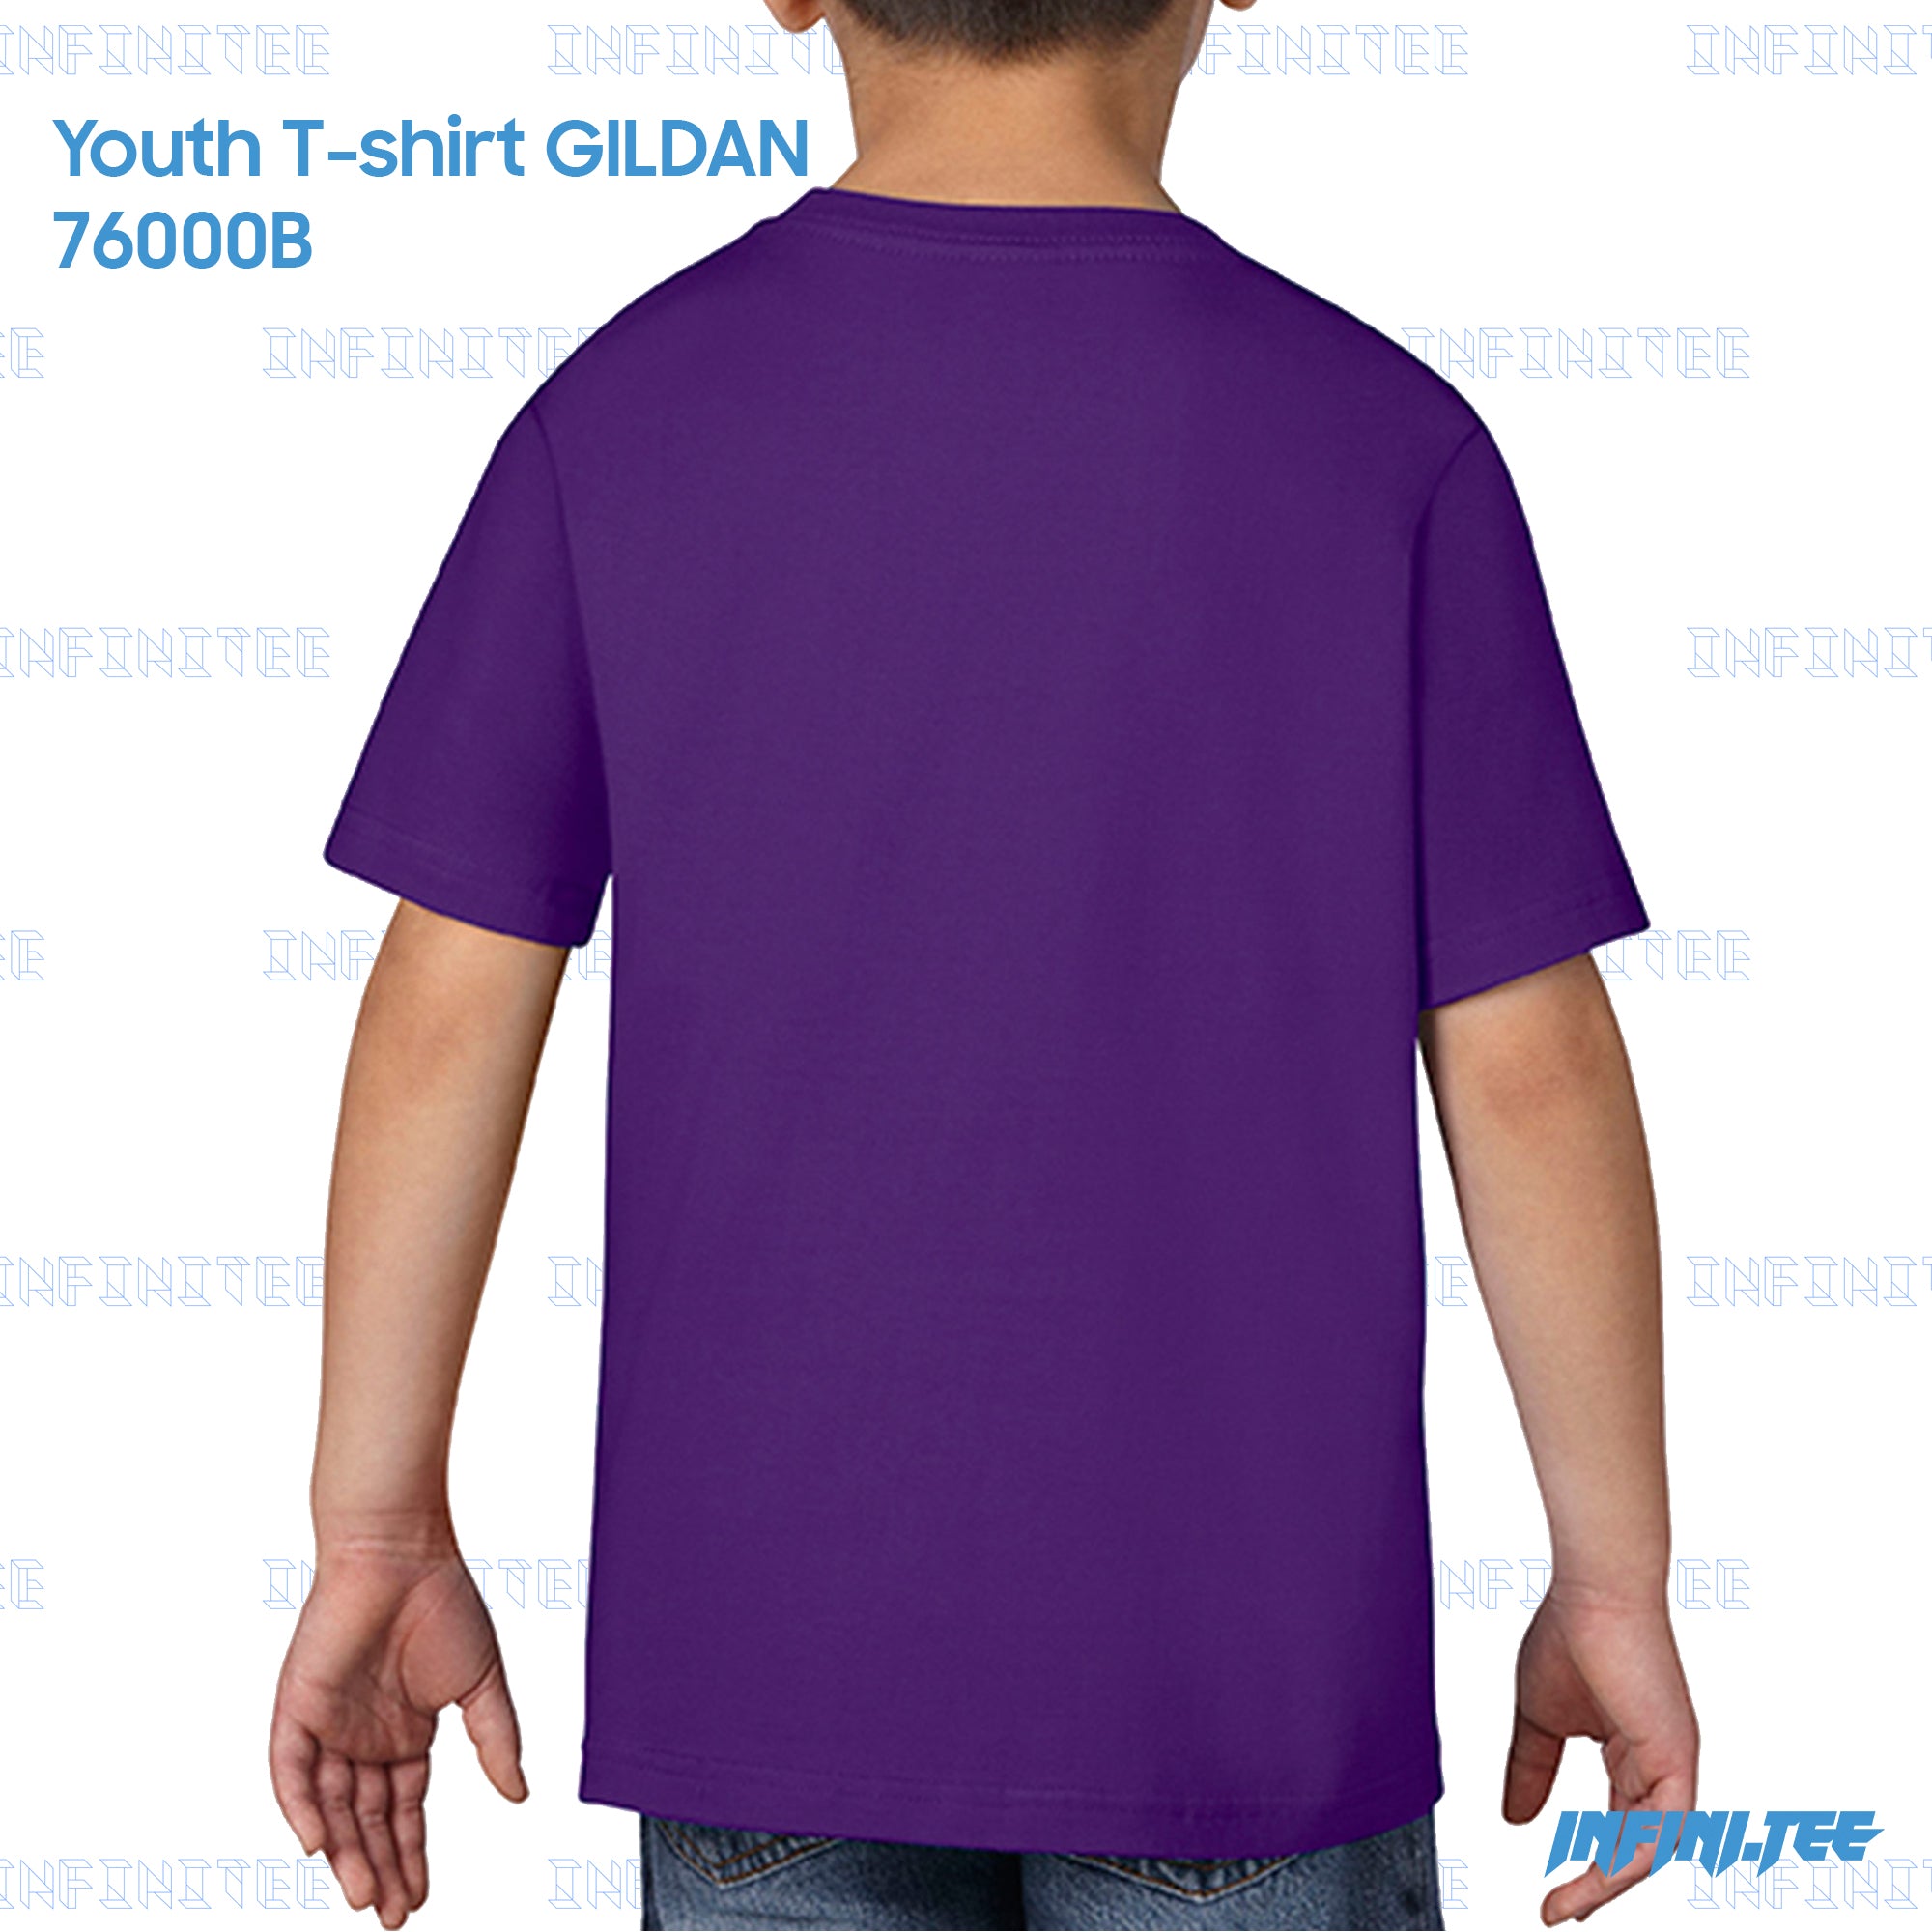 Youth T-shirt 76000B GILDAN - PURPLE